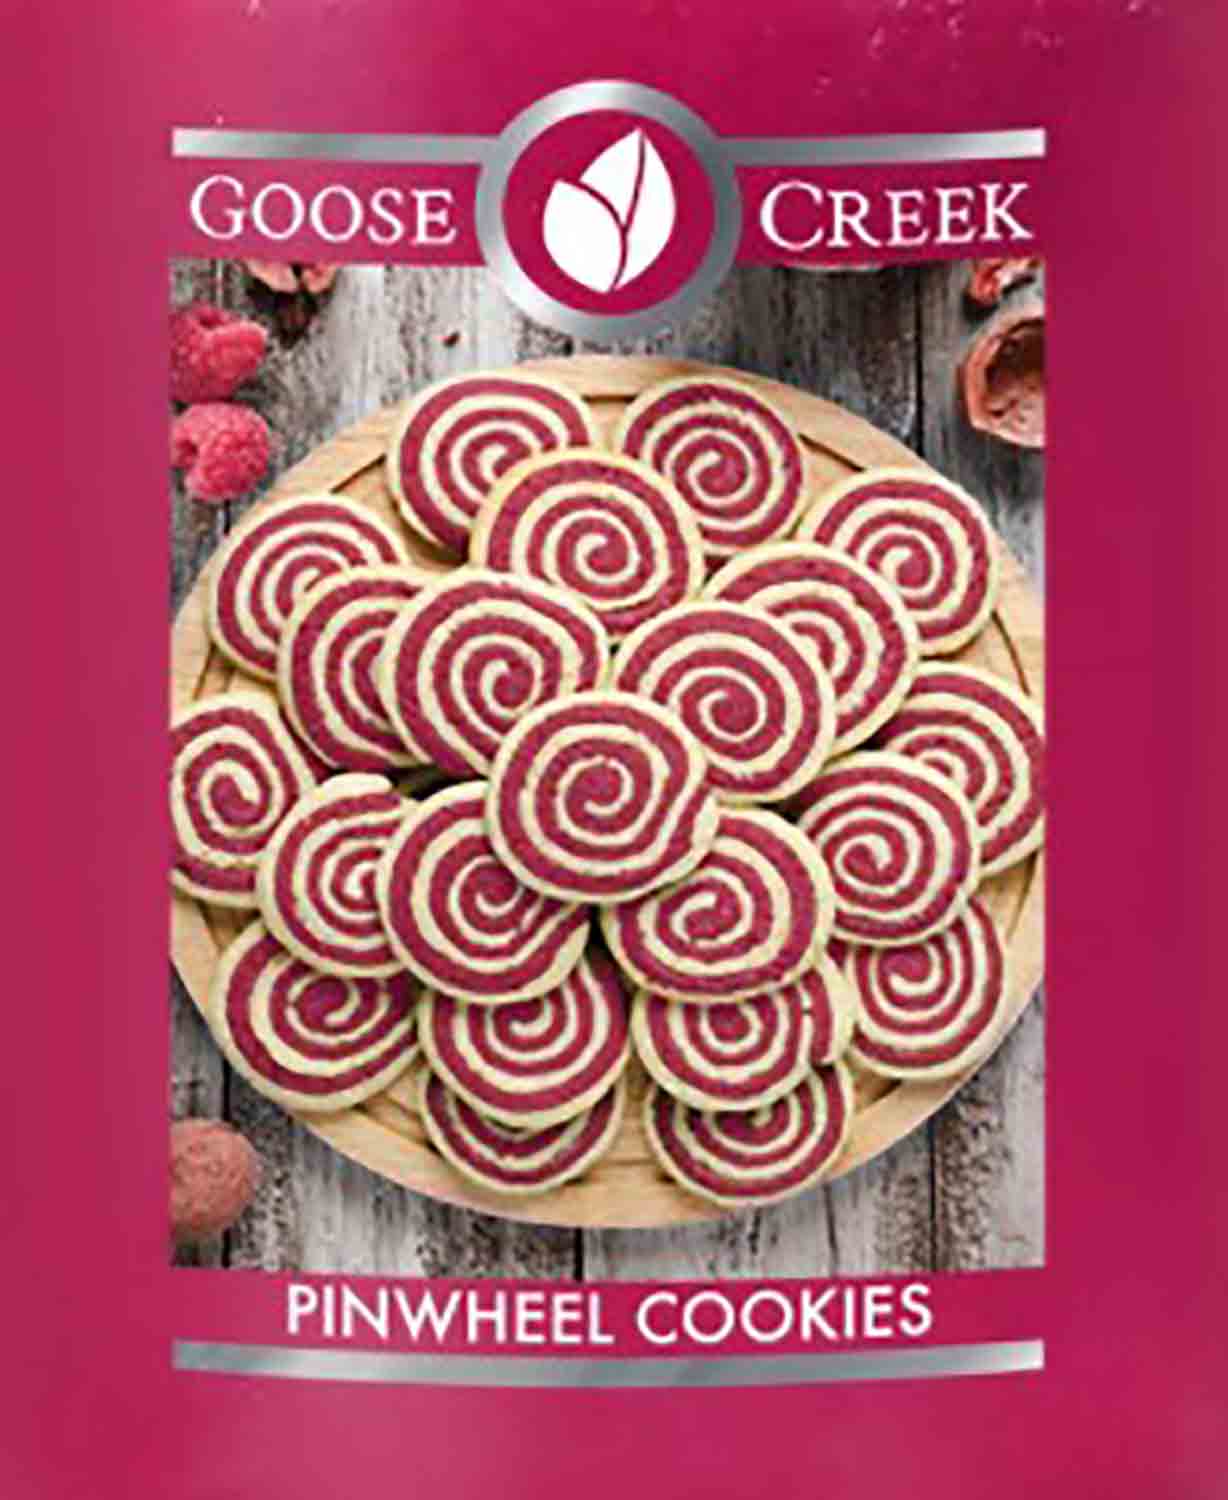 Goose Creek Pinwheel Cookies 22g - Crumble vosk